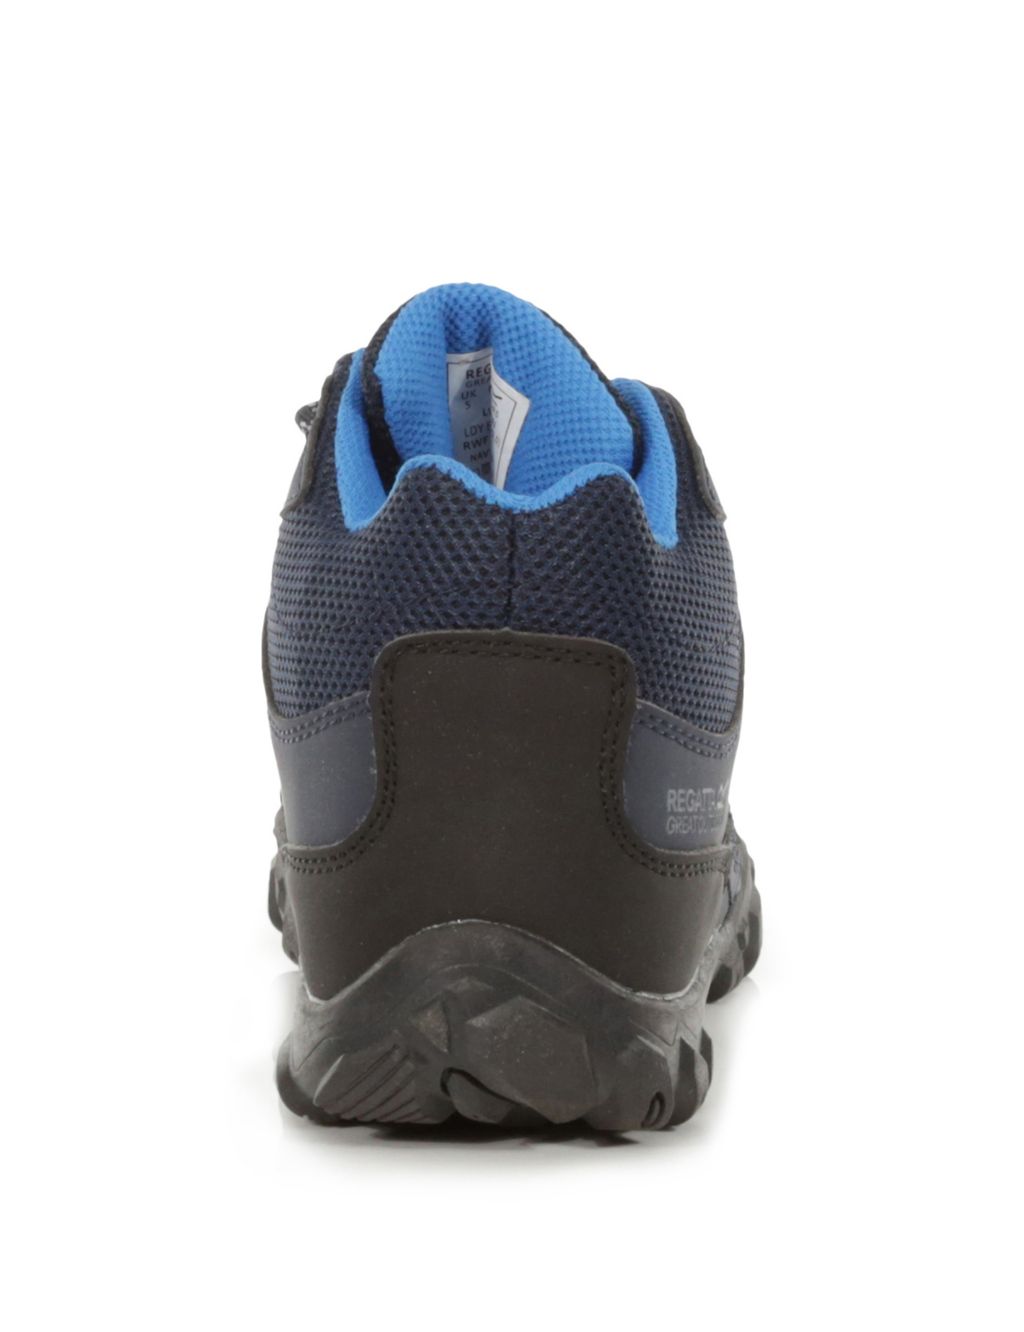 Lady Edgepoint Waterproof Walking Shoes image 4